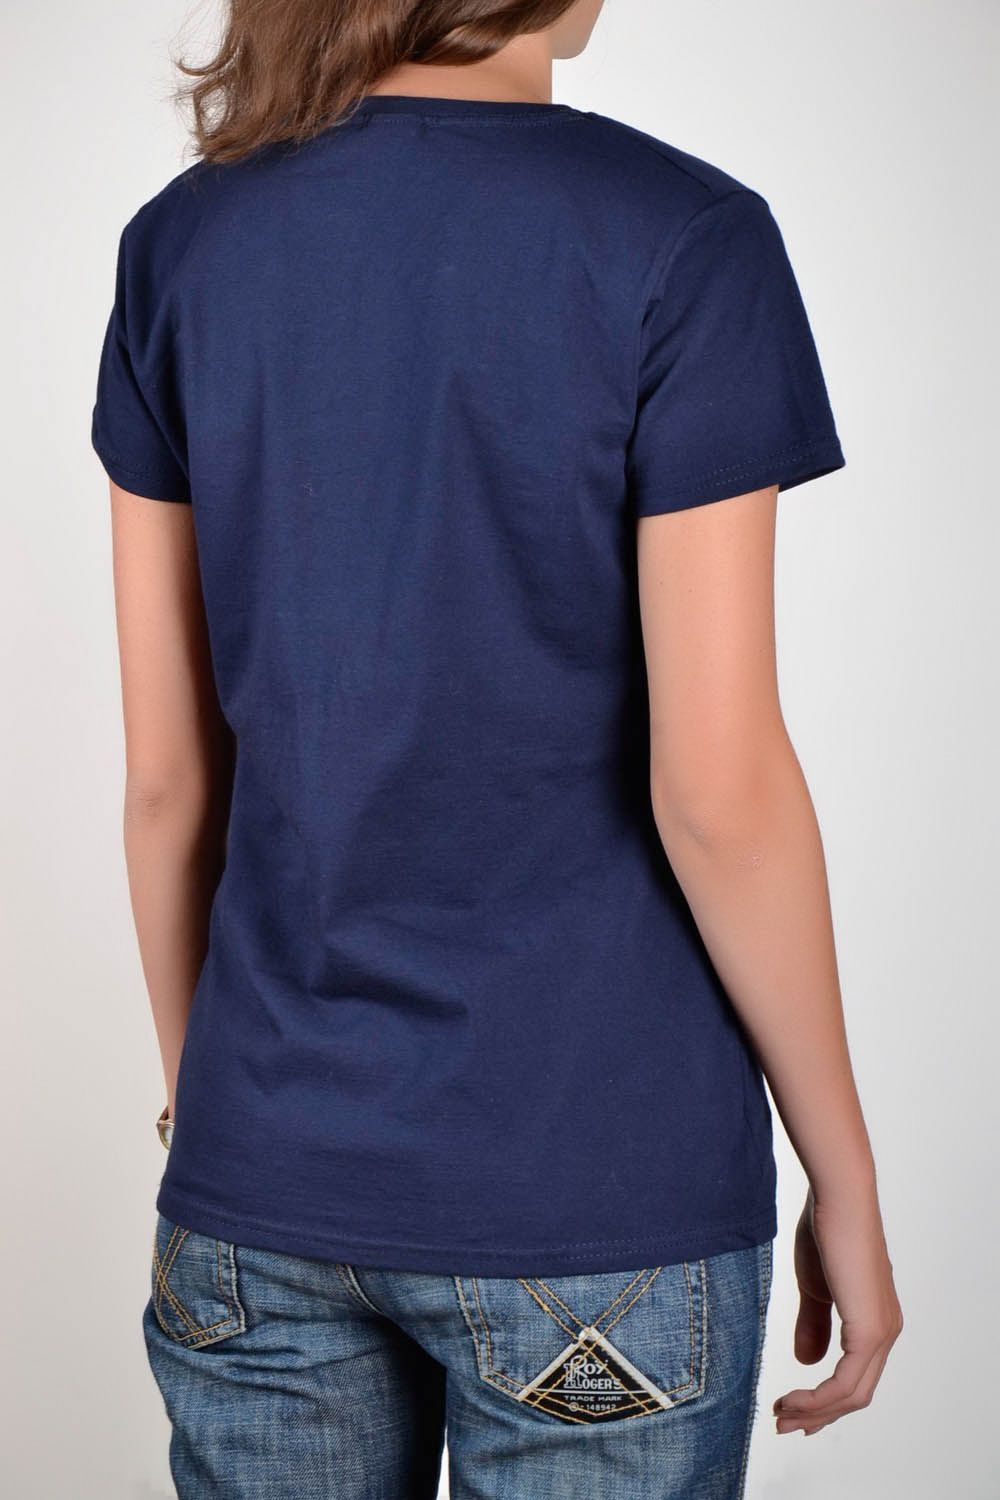 Camiseta de mujer de color azul oscuro Erizo foto 3